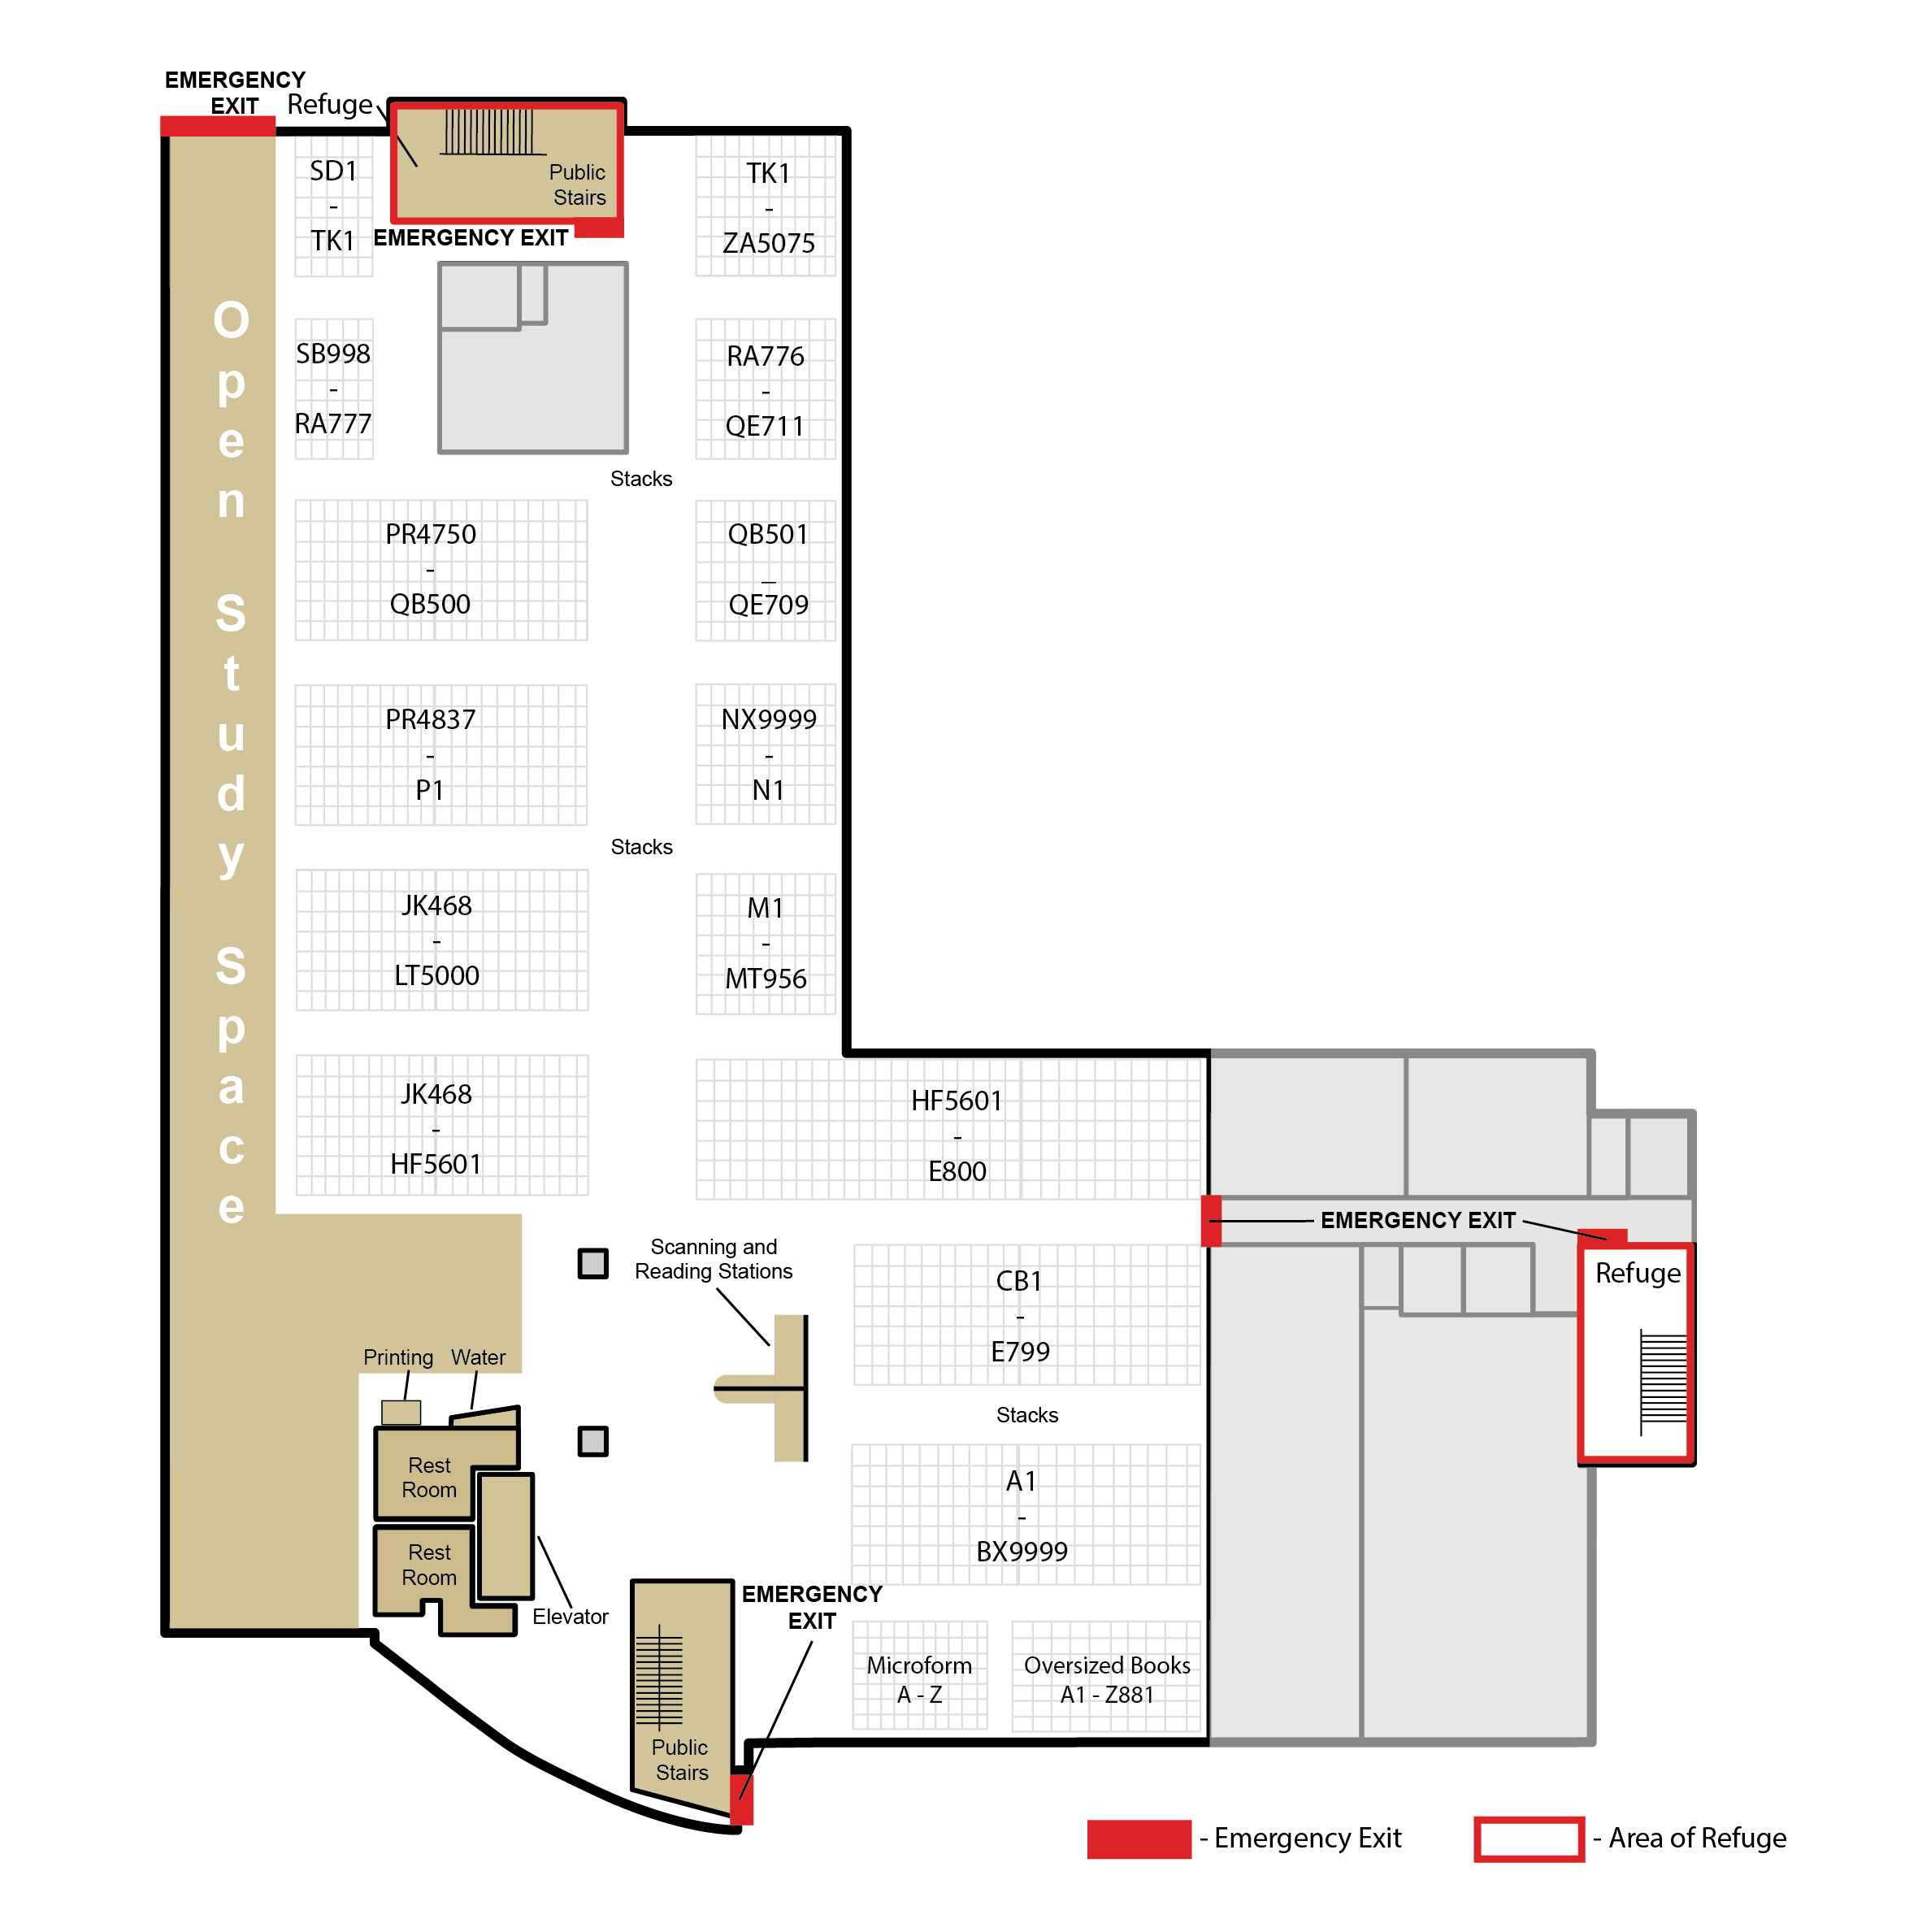 map of ground floor of utc library